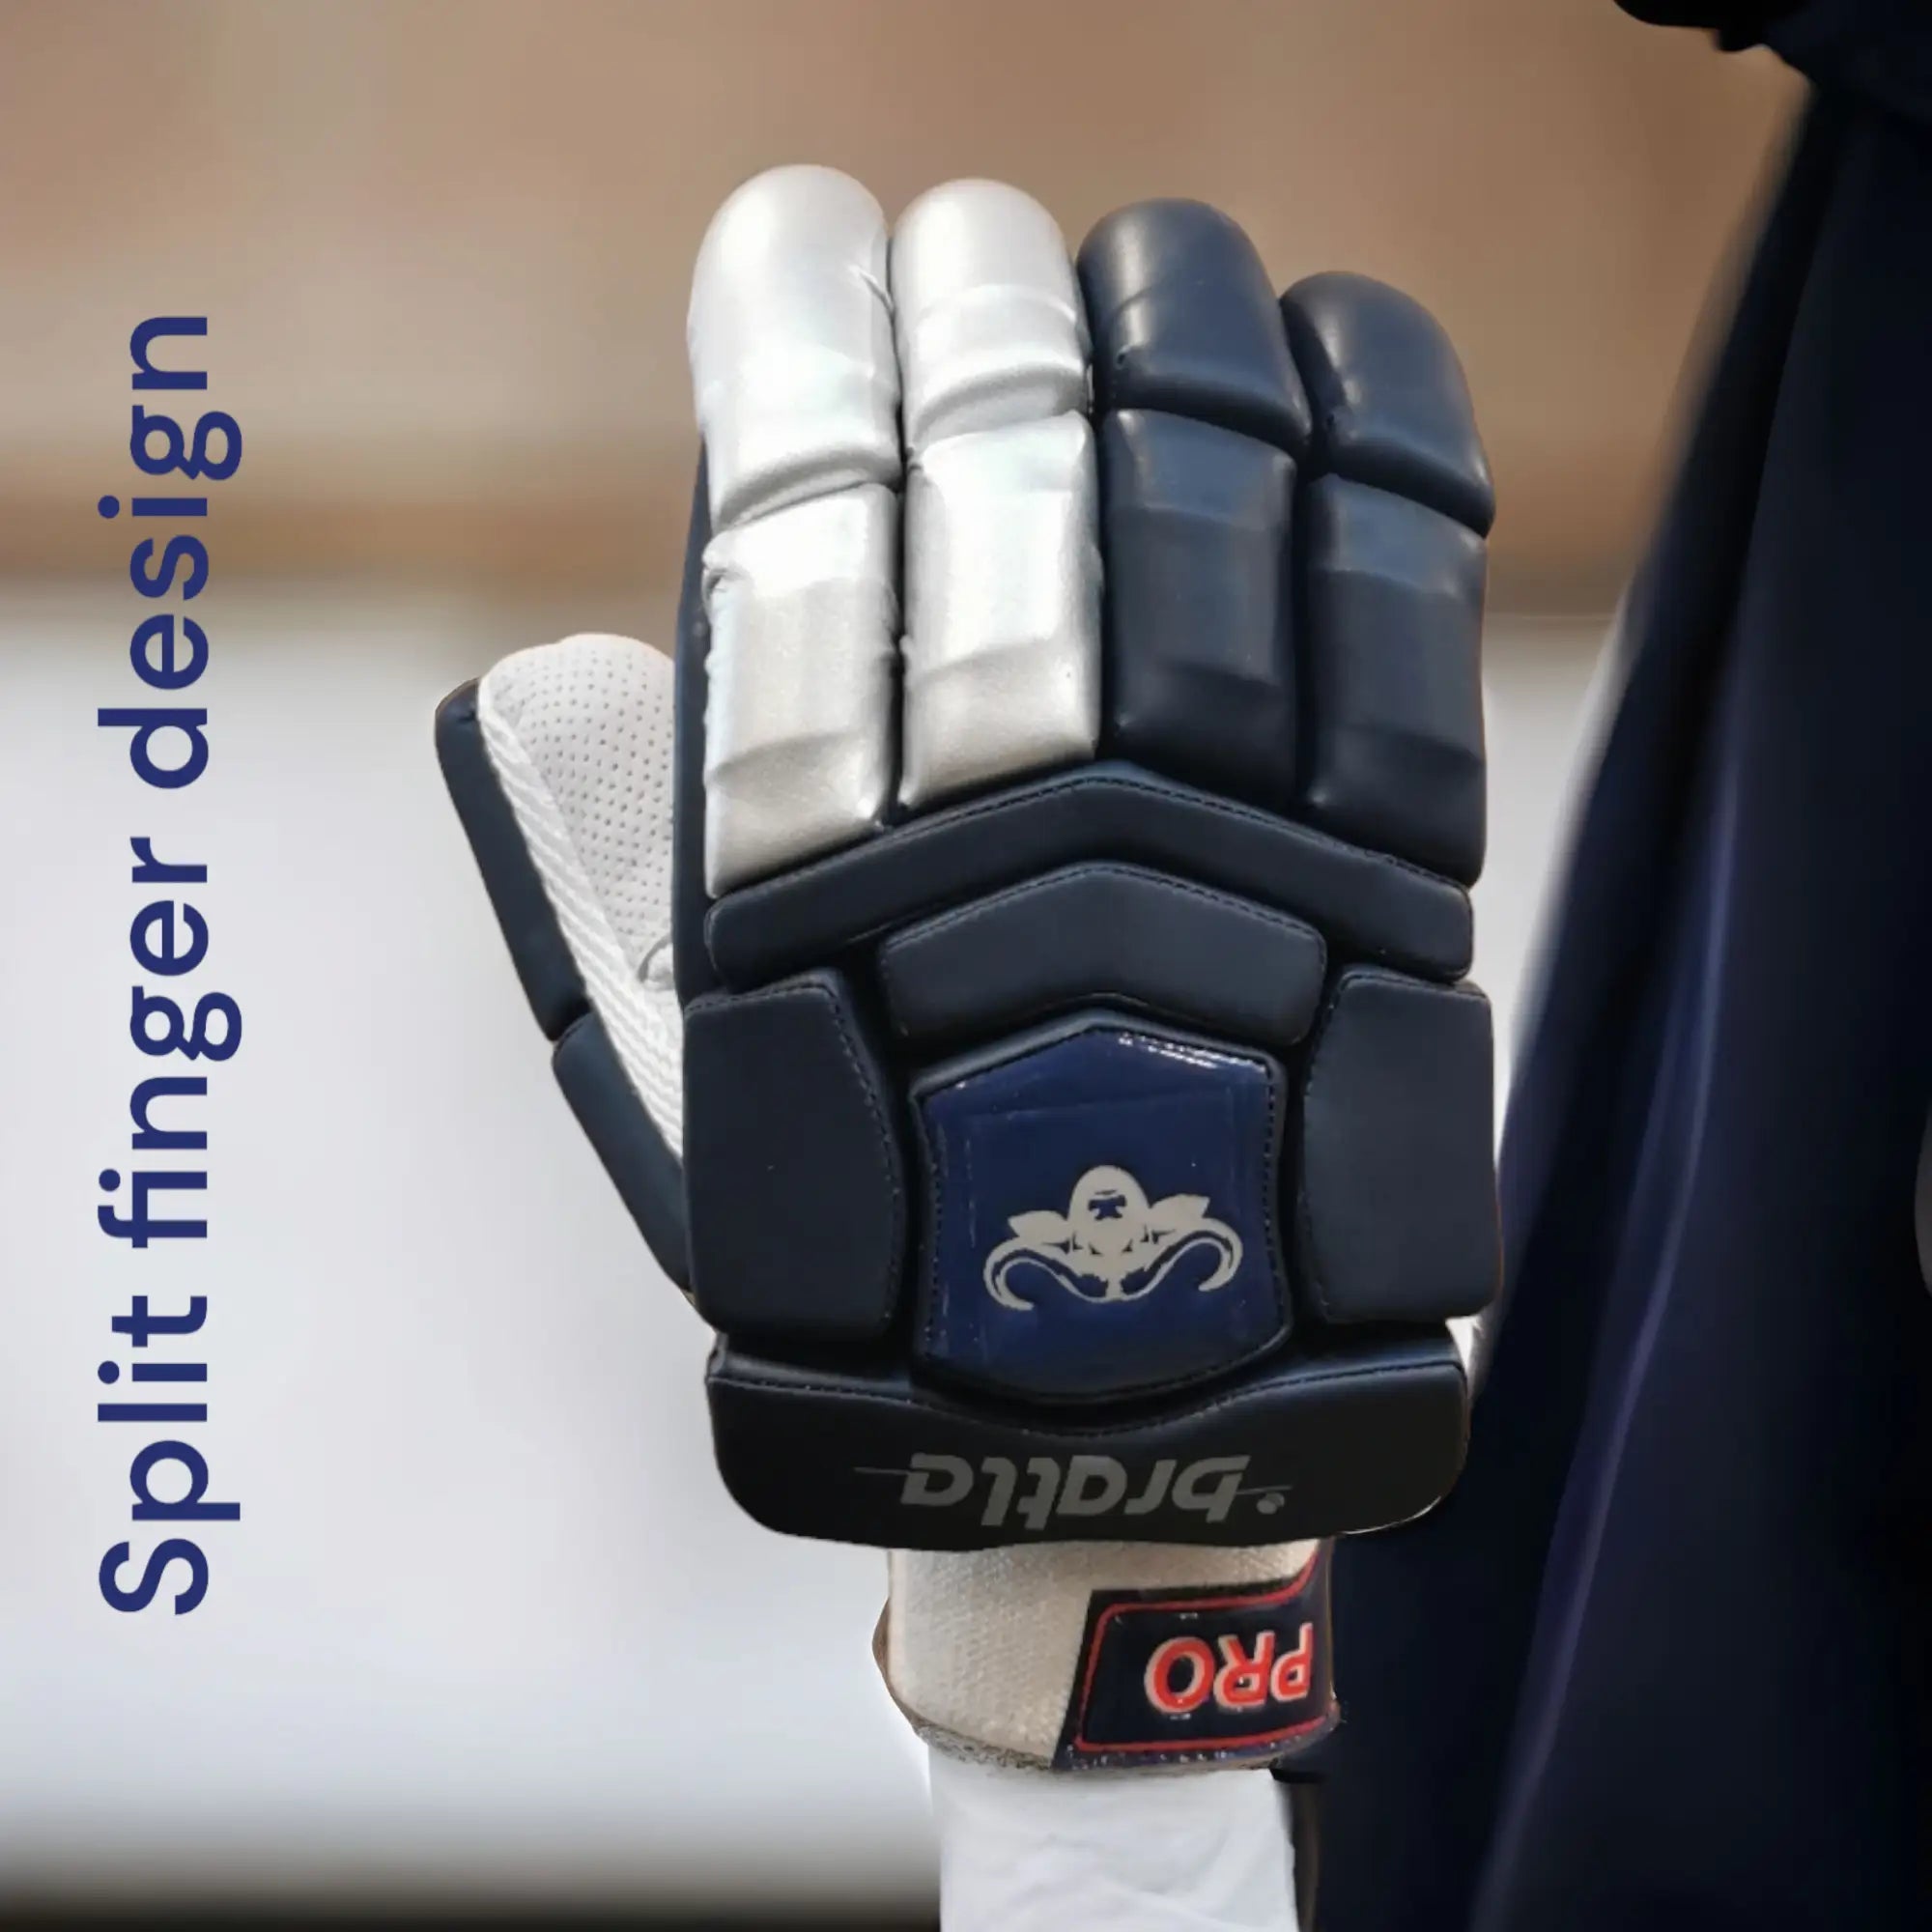 Bratla Pro Cricket Batting Gloves - GLOVE - BATTING